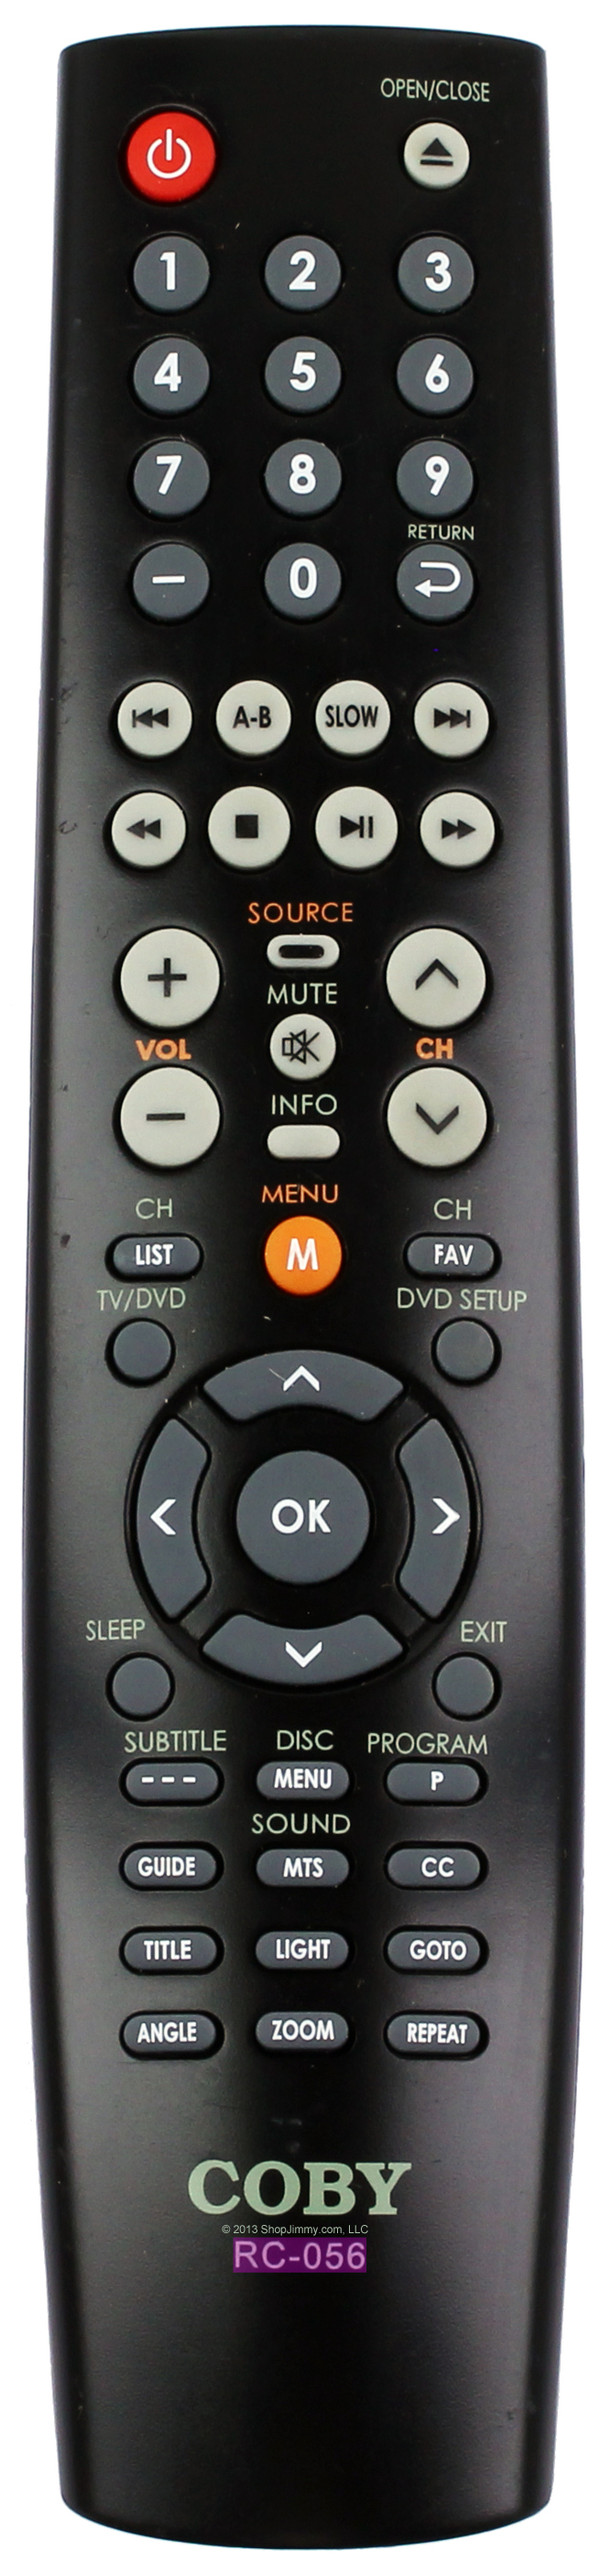 Coby RC-056 Remote Control